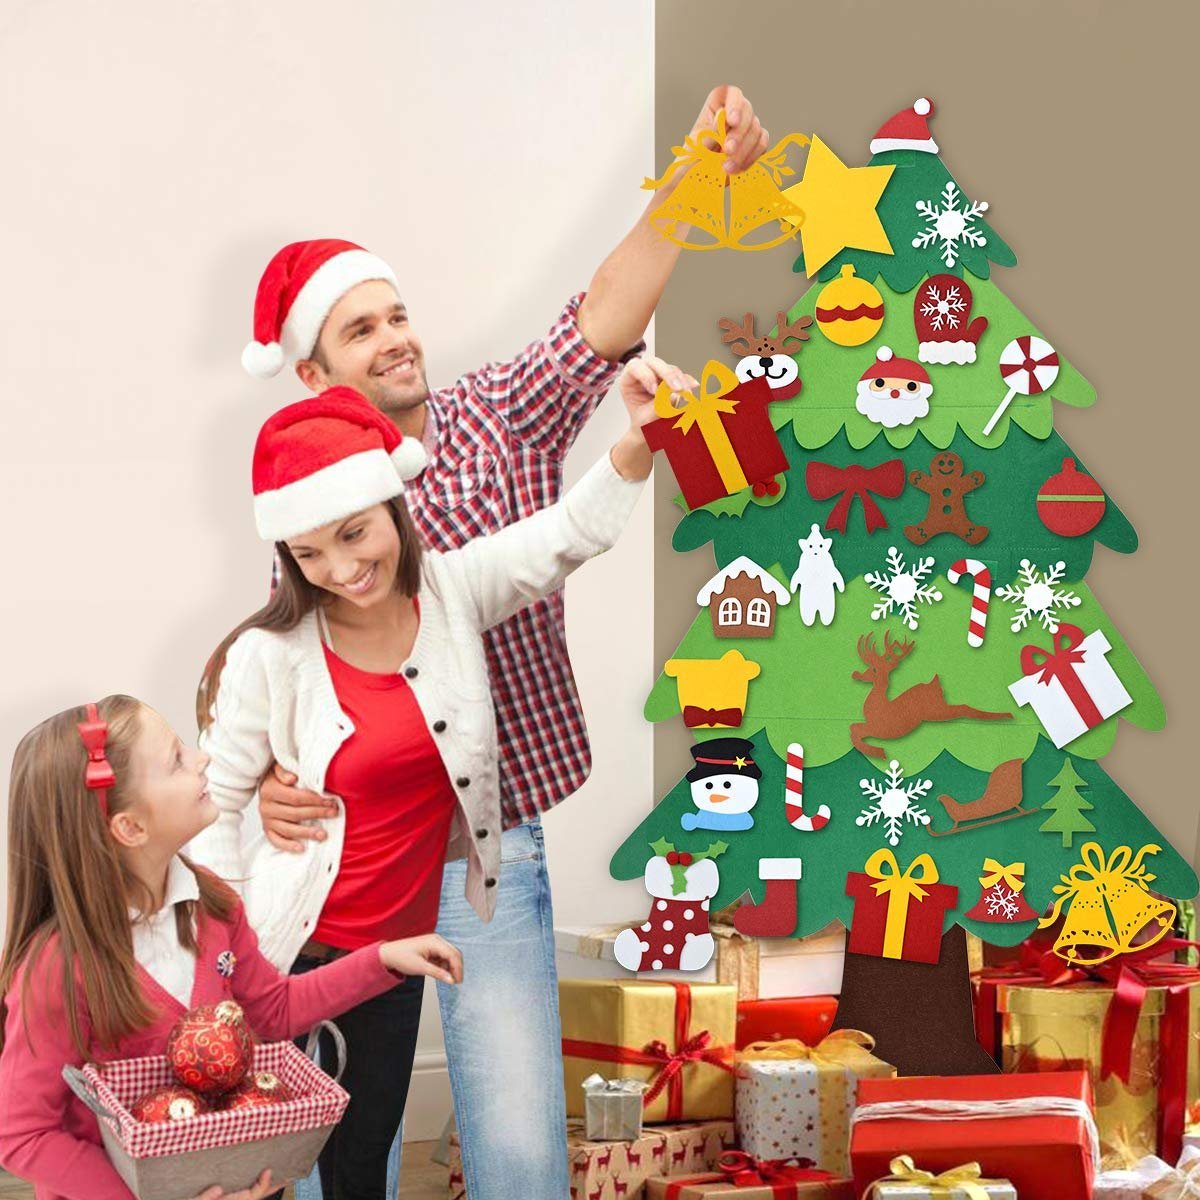 Felt Christmas Tree Set With 32PCS Ornaments Wall Hanging Tree & 35LED String Lights